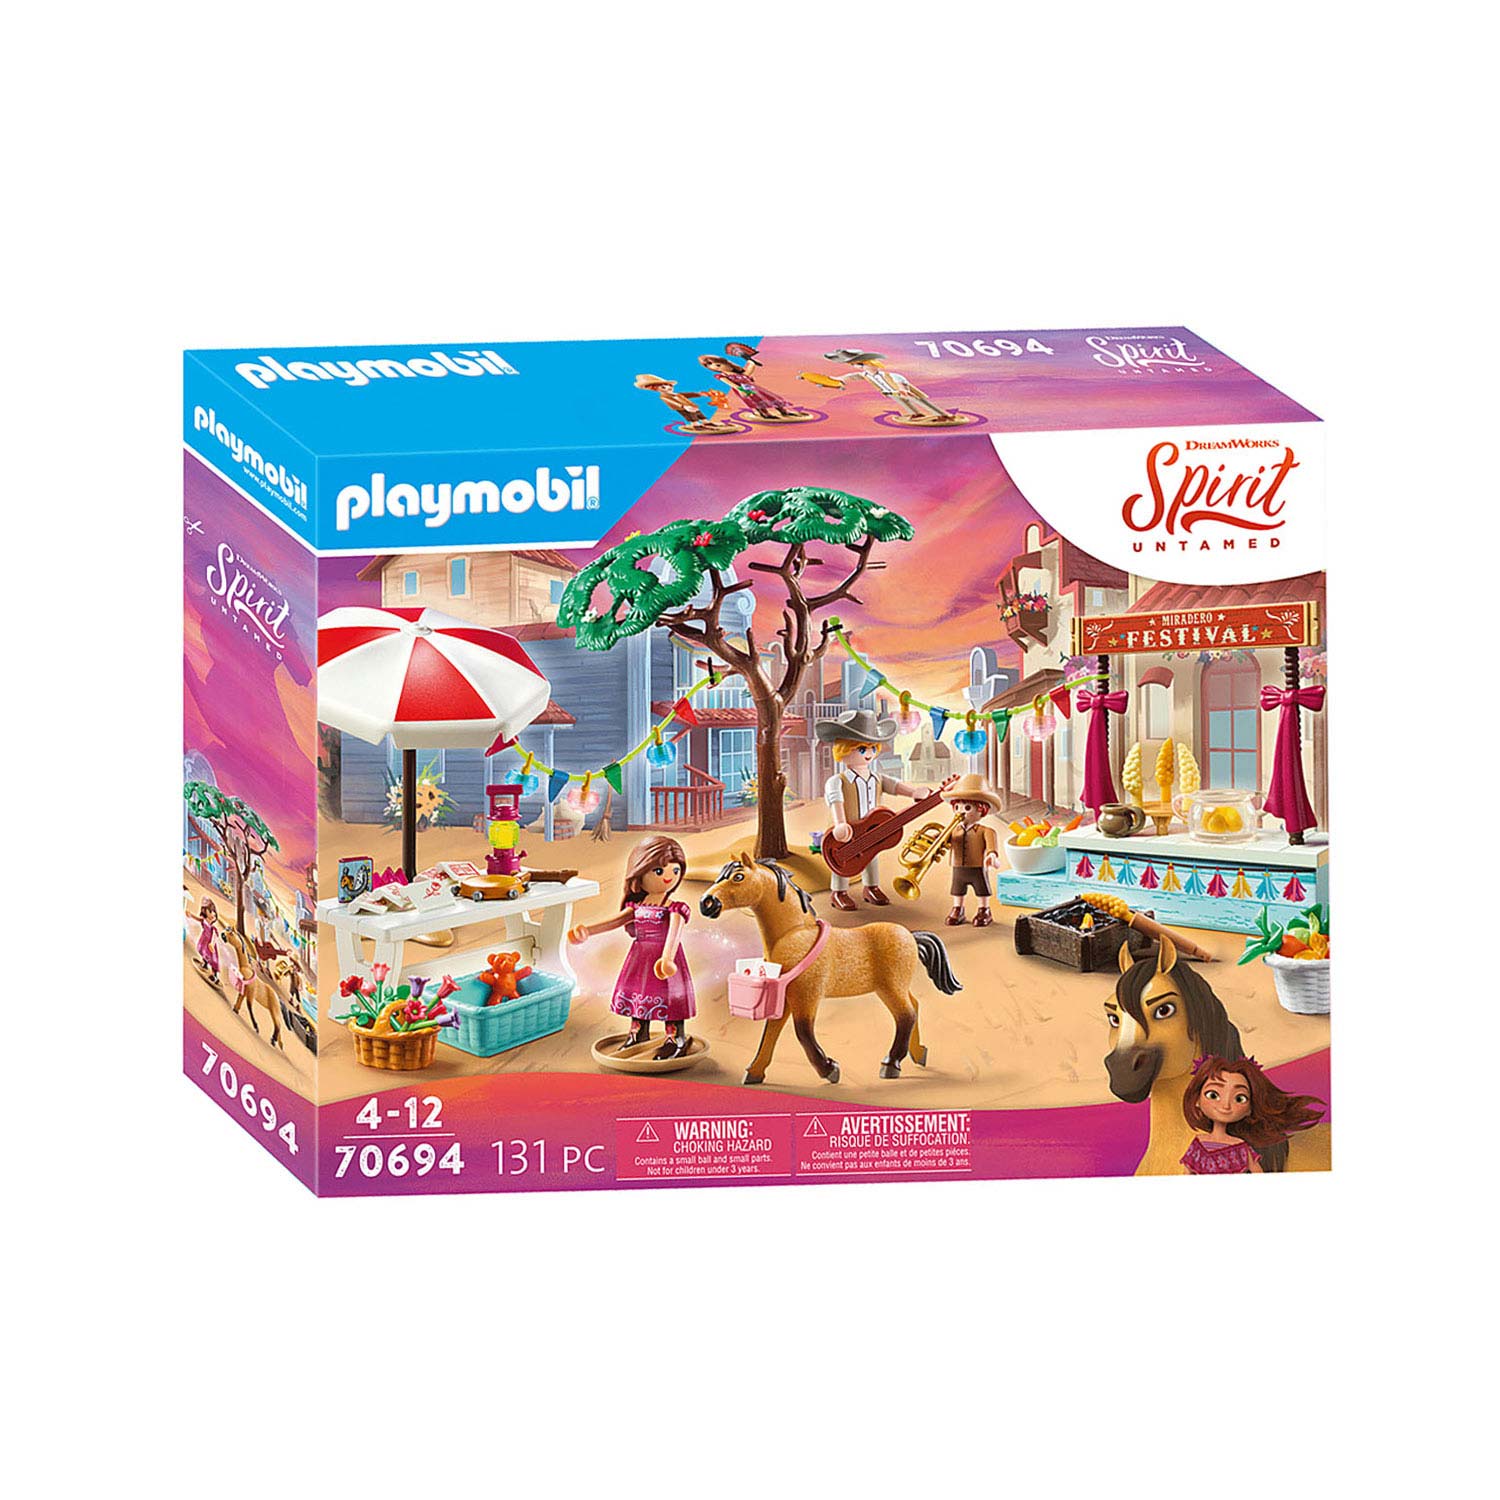 Playmobil Spirit 70694 Miradero Festival